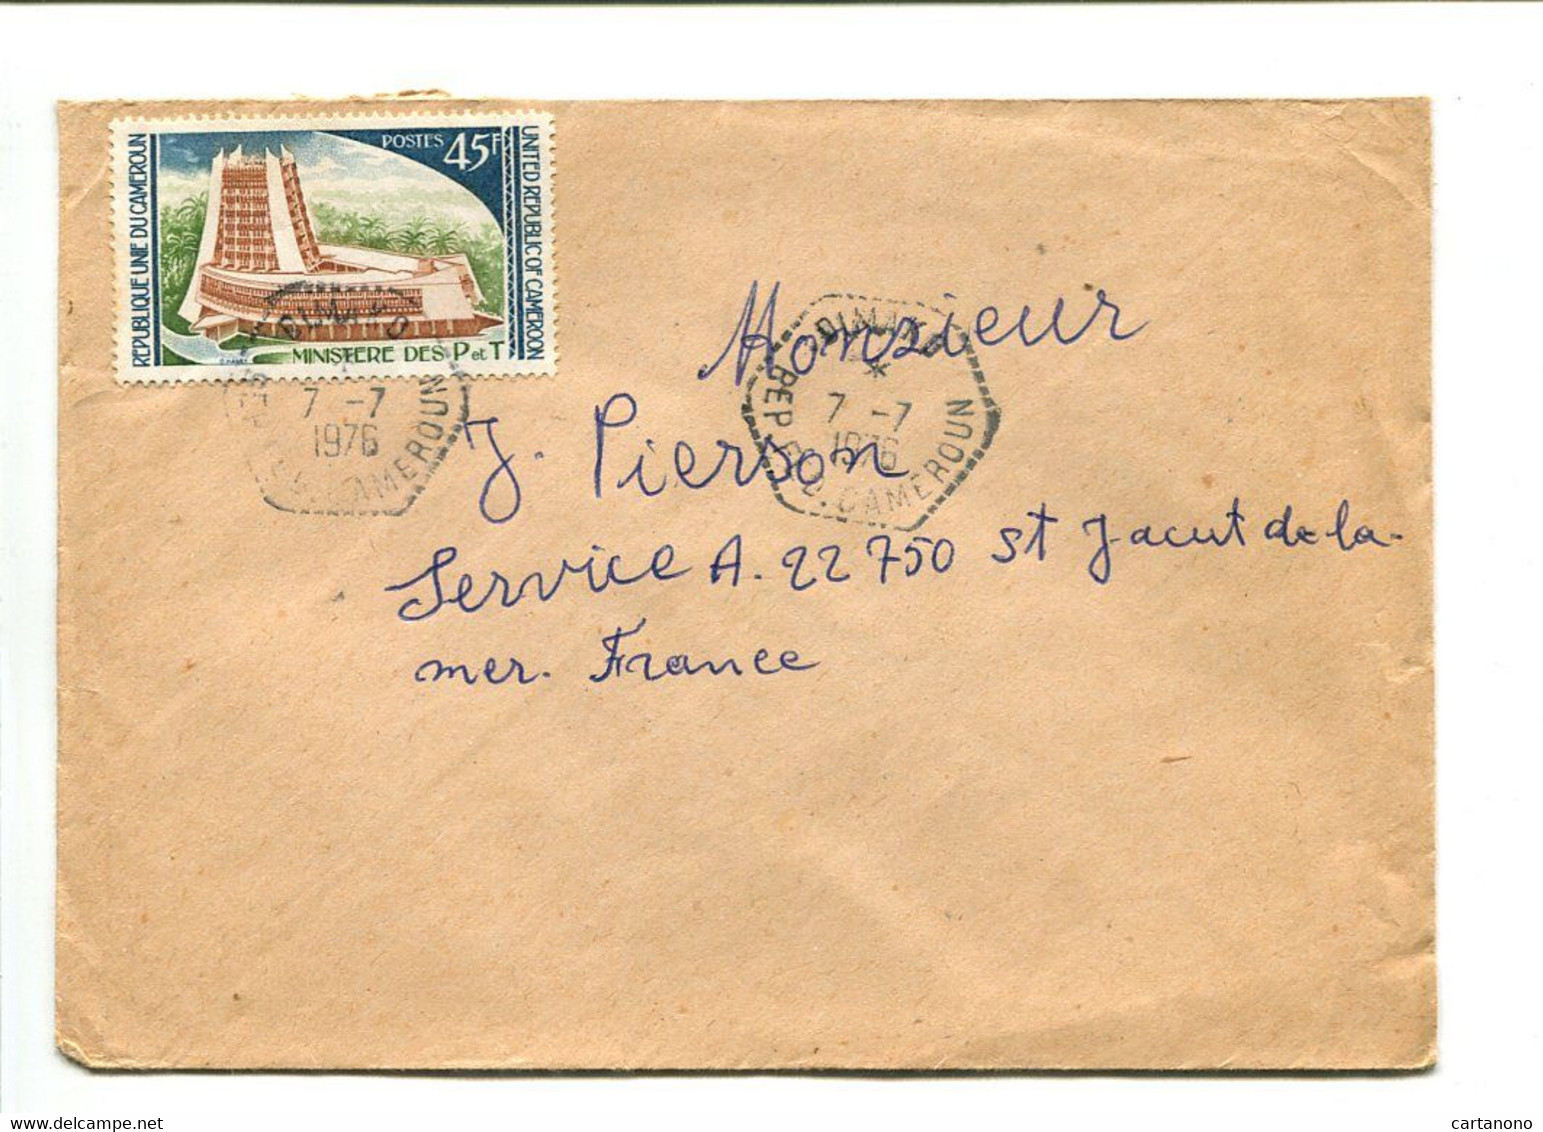 CAMEROUN Dimako1976  - Affranchissement Seul Sur Lettre - [cachet Perlé Hexagonal] - Cameroun (1960-...)